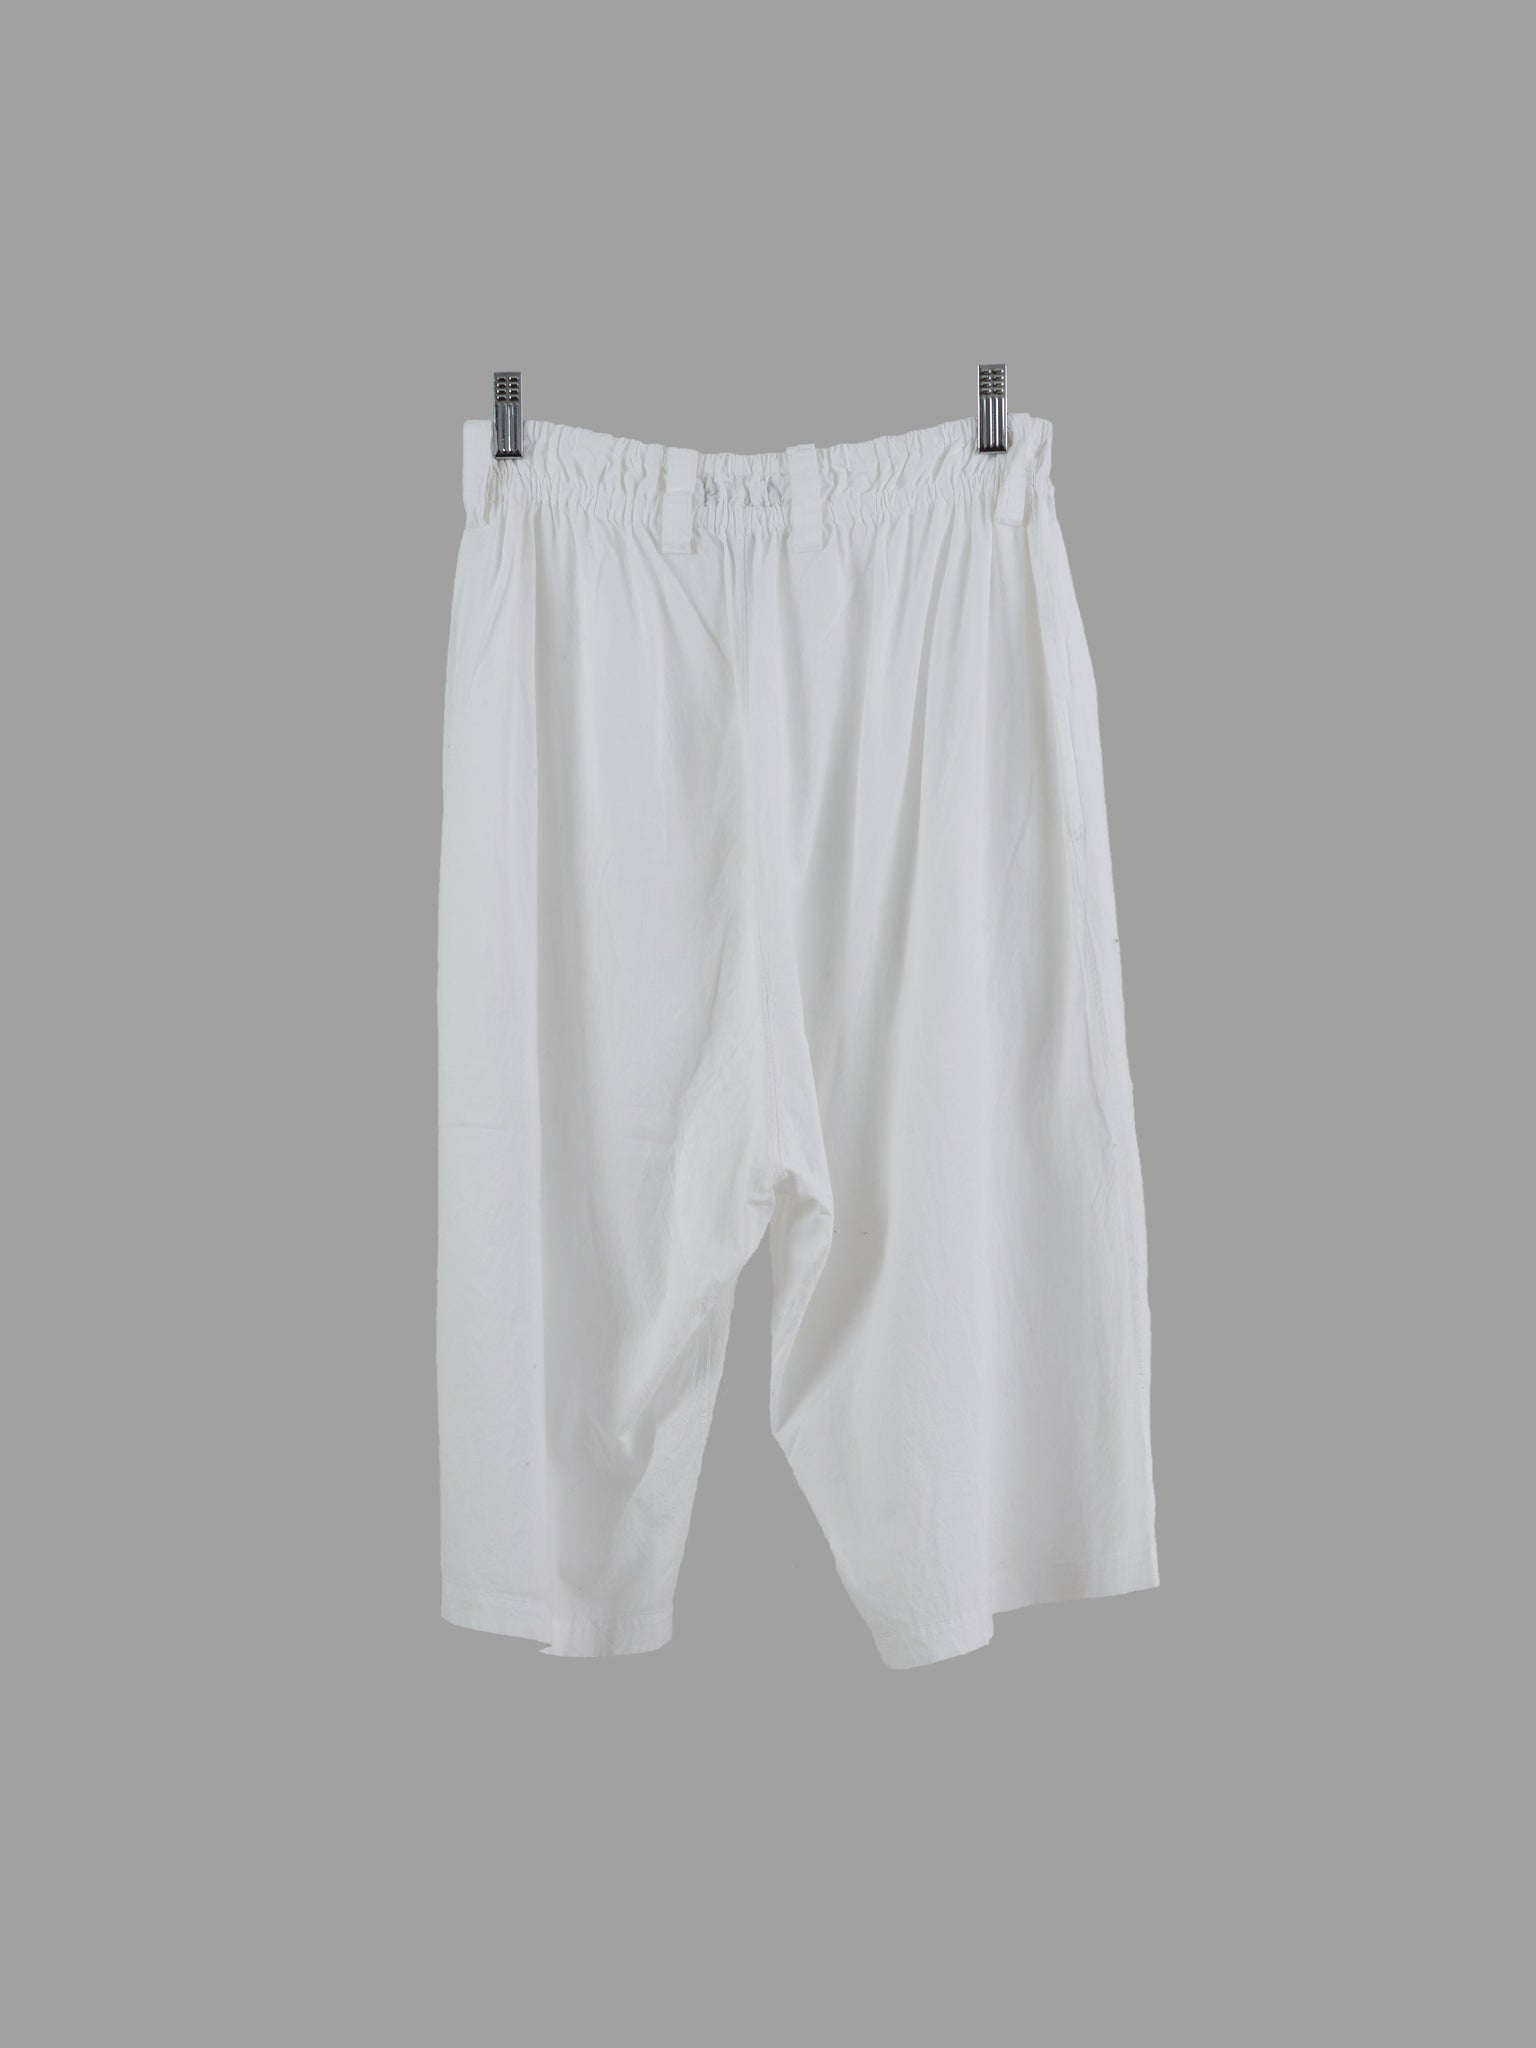 Issey Miyake Men white cotton sheer elastic waist drop crotch shorts - 1 S M